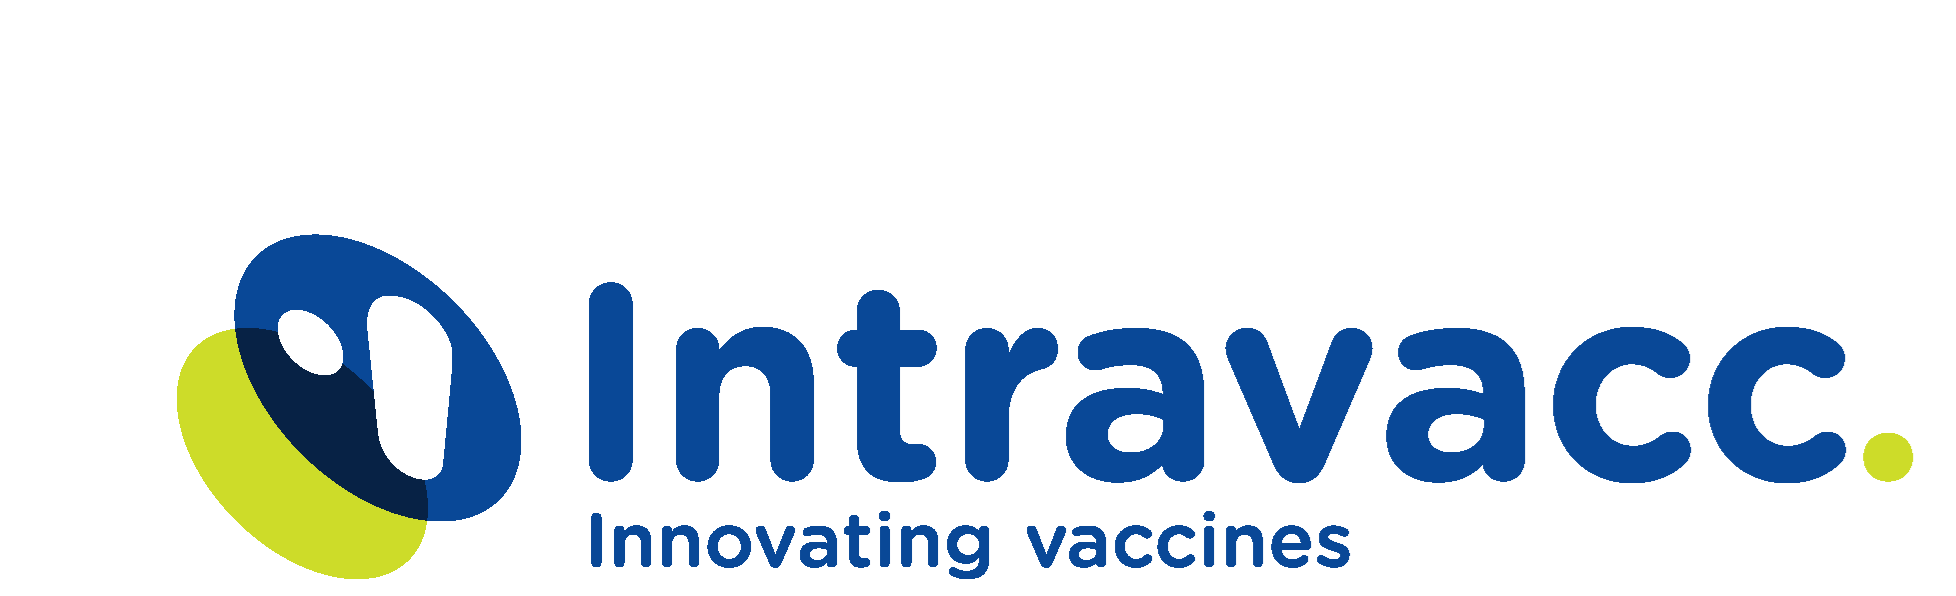 Intravacc logo.png